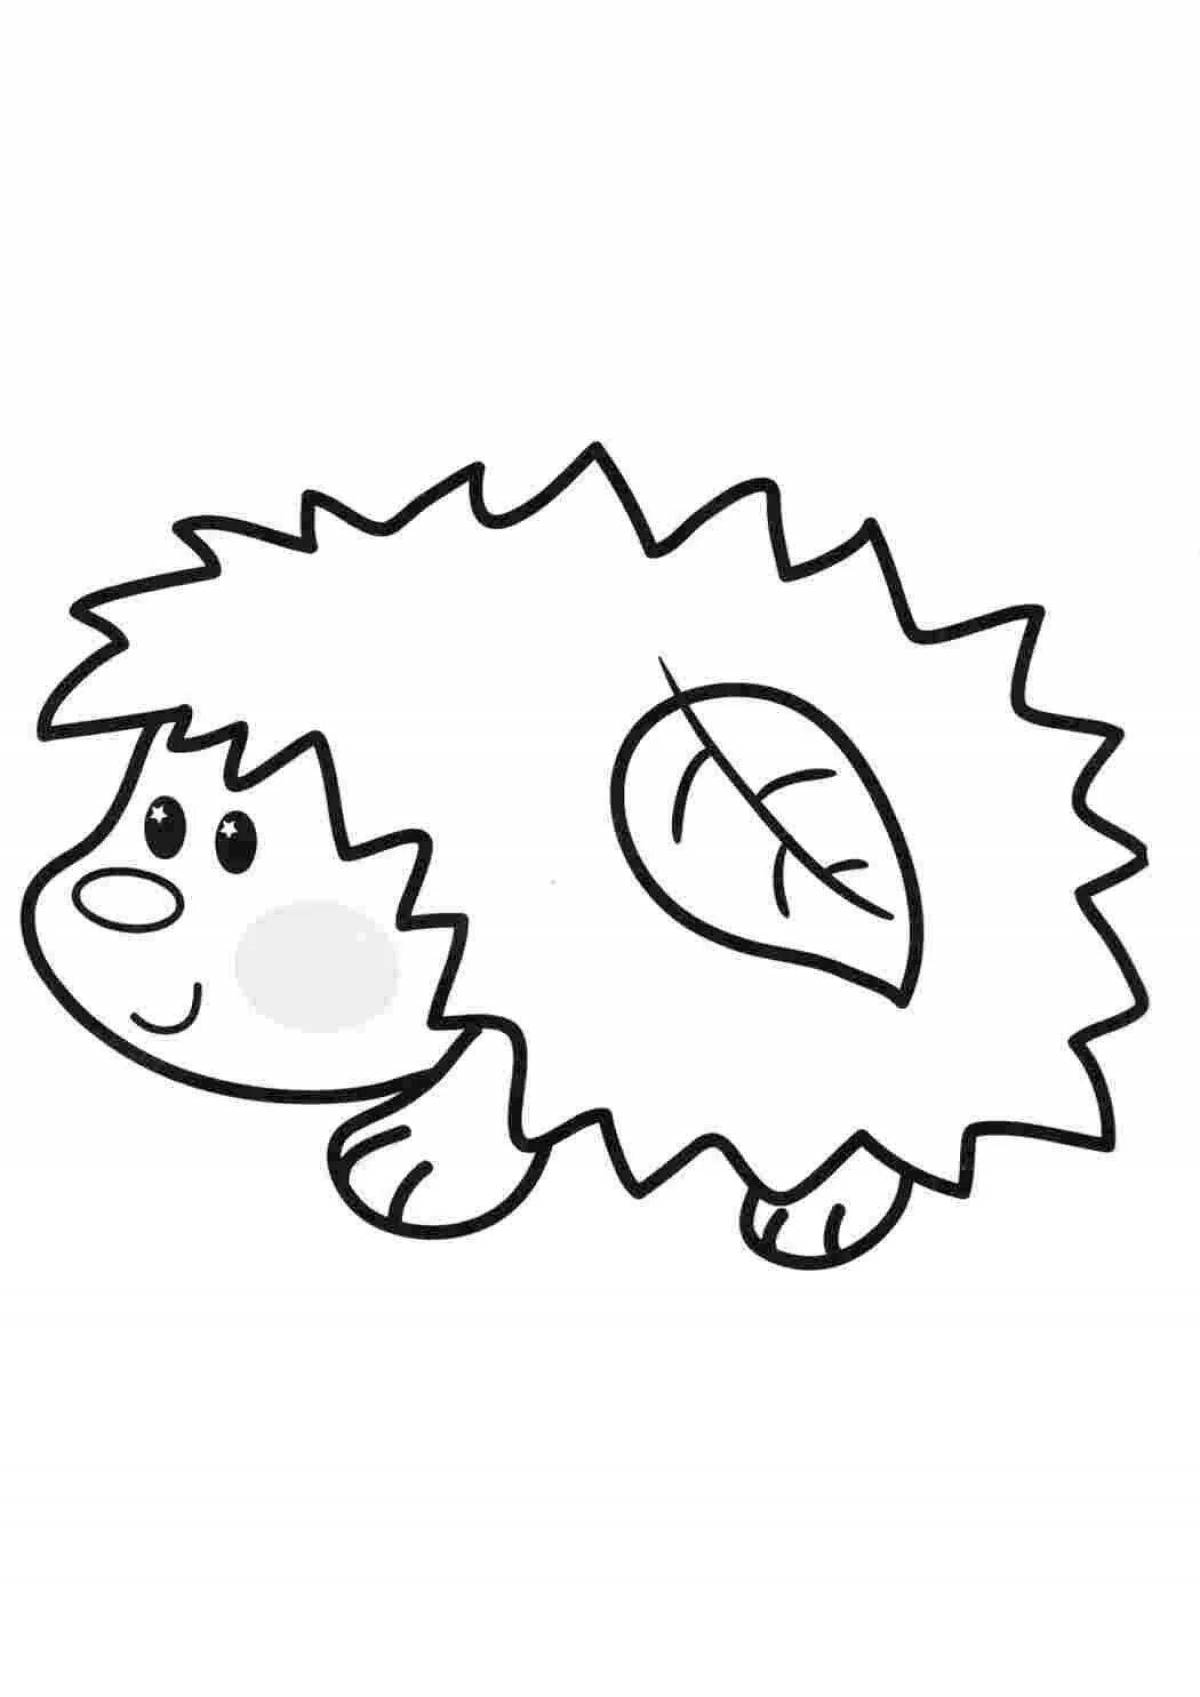 Animated hedgehog drawing